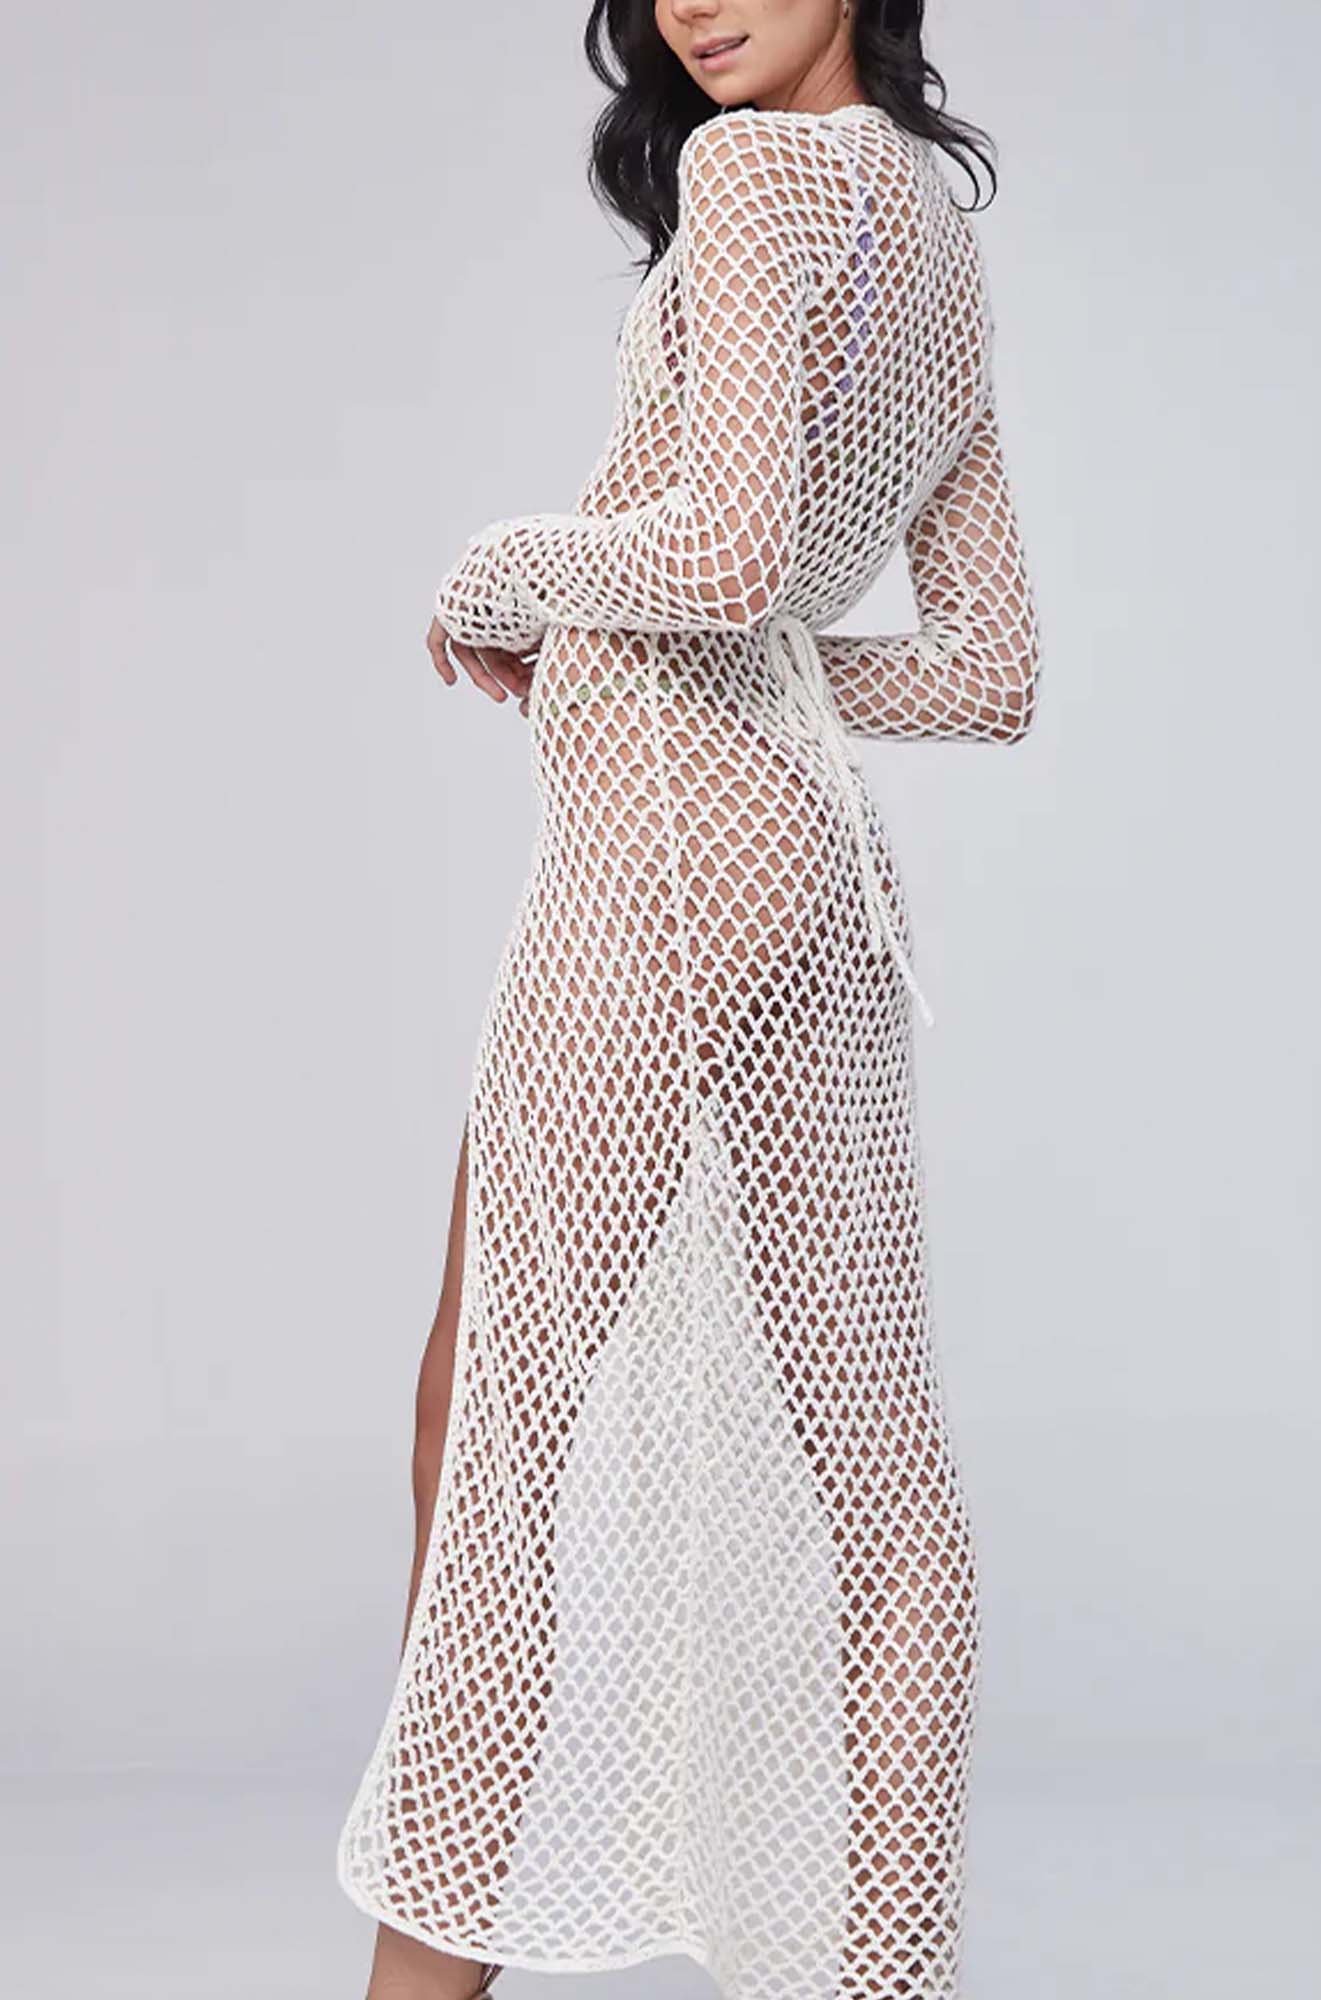 Elki Ivory Crochet Dress